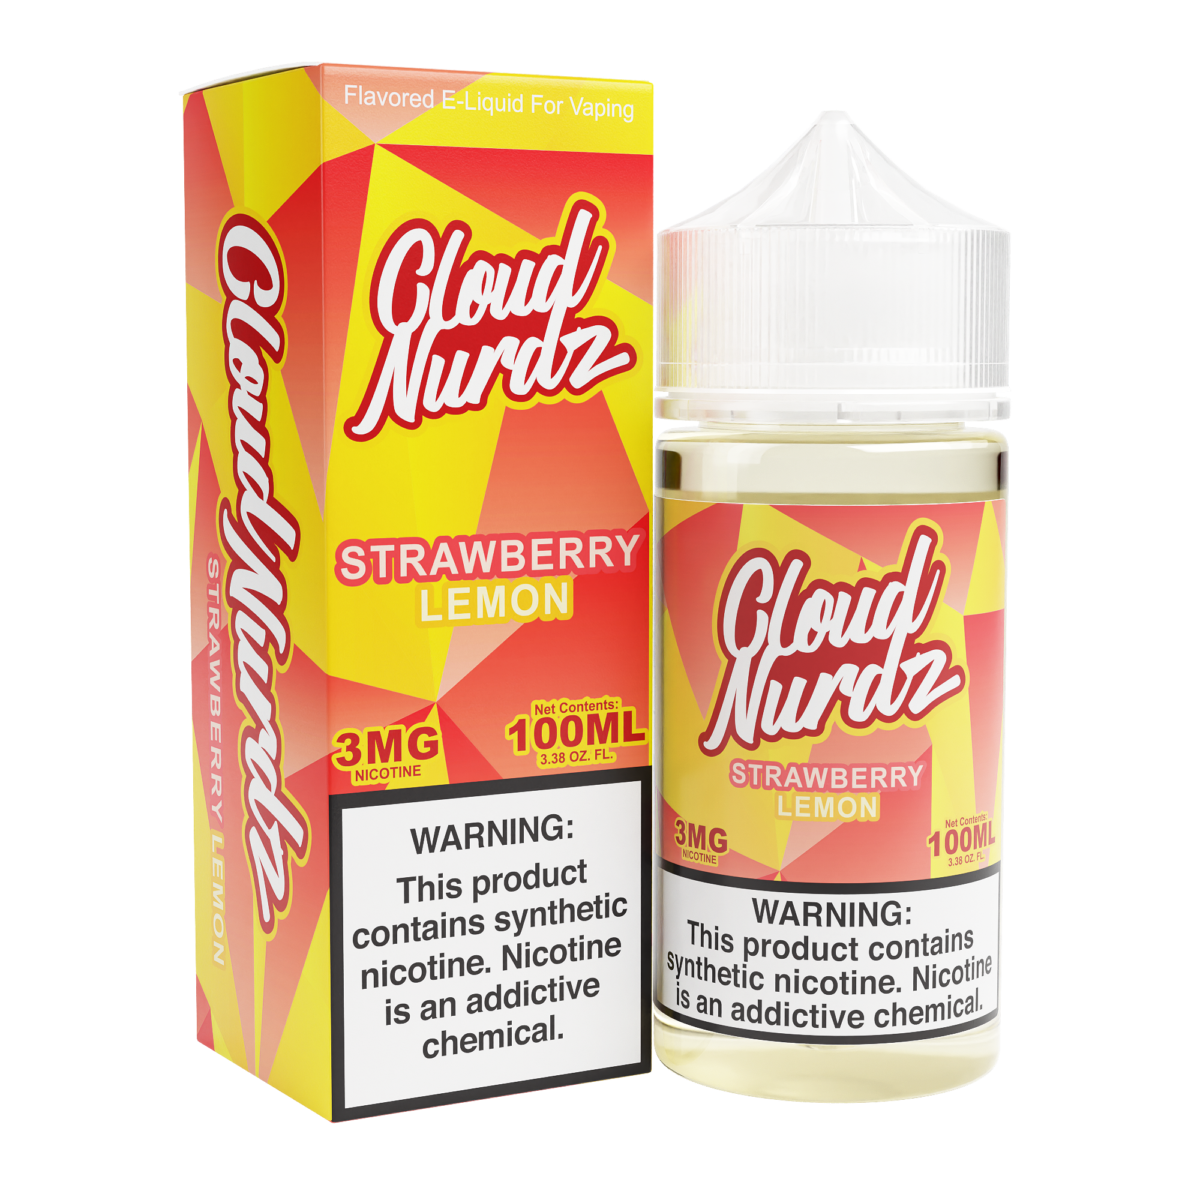 Cloud Nurdz Series E-Liquid 100mL Strawberry Lemon with packaging